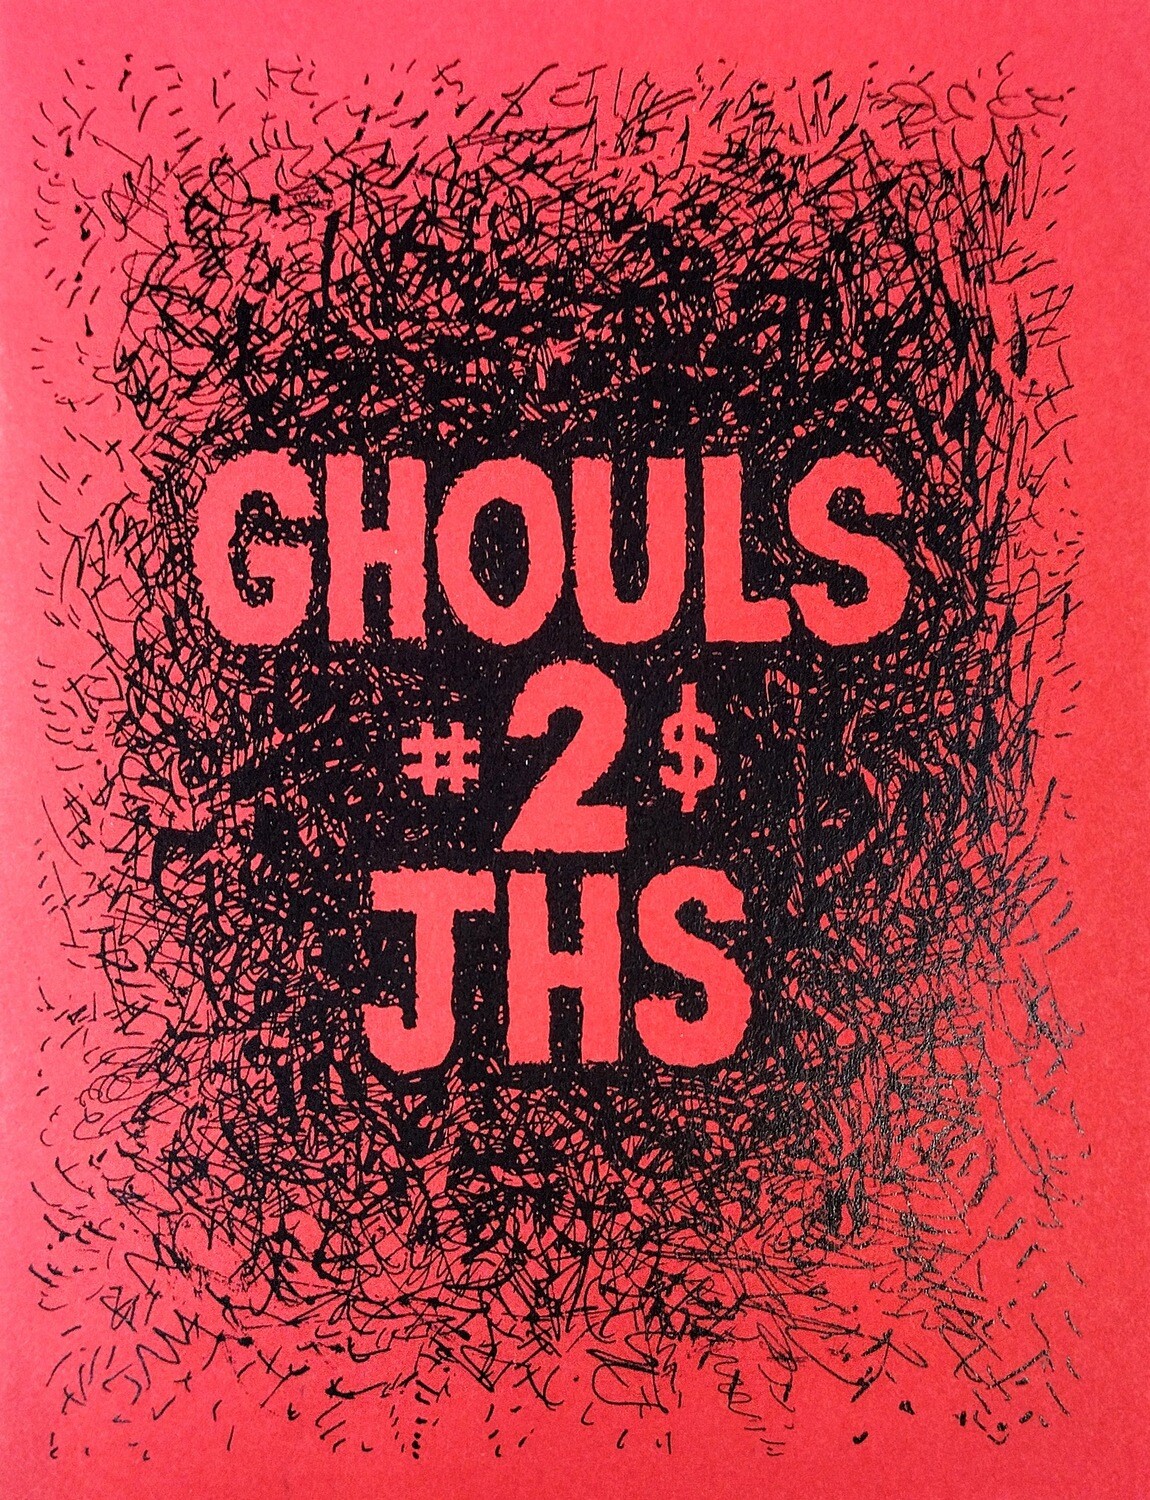 Ghouls #2 - Zine by Josh Simmons